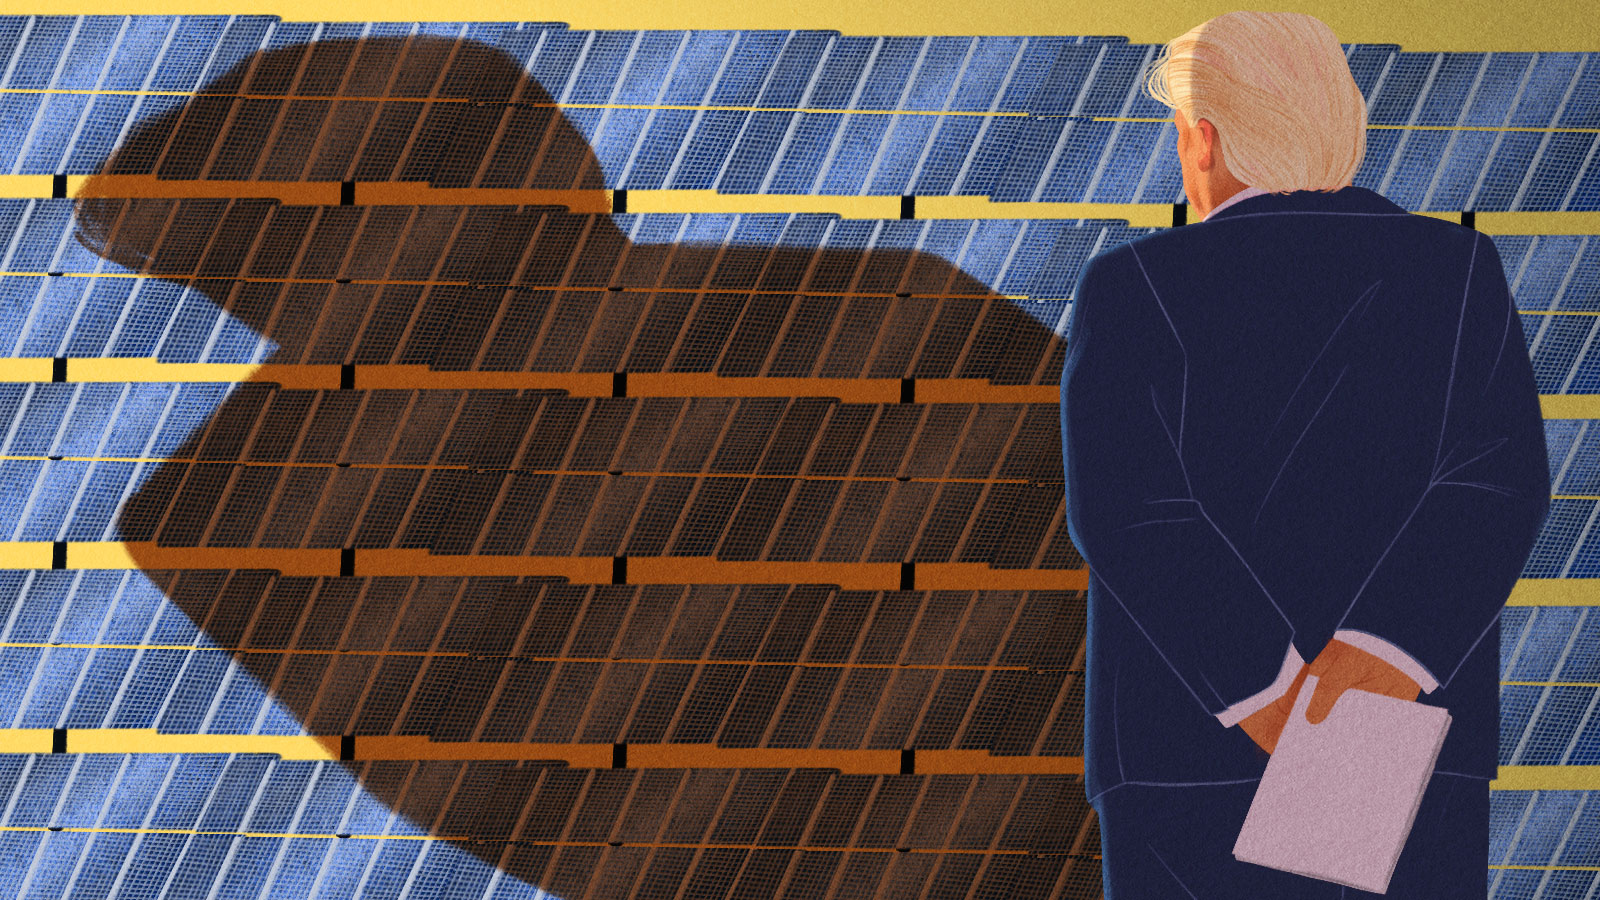 Trump administration buries dozens of clean energy studies